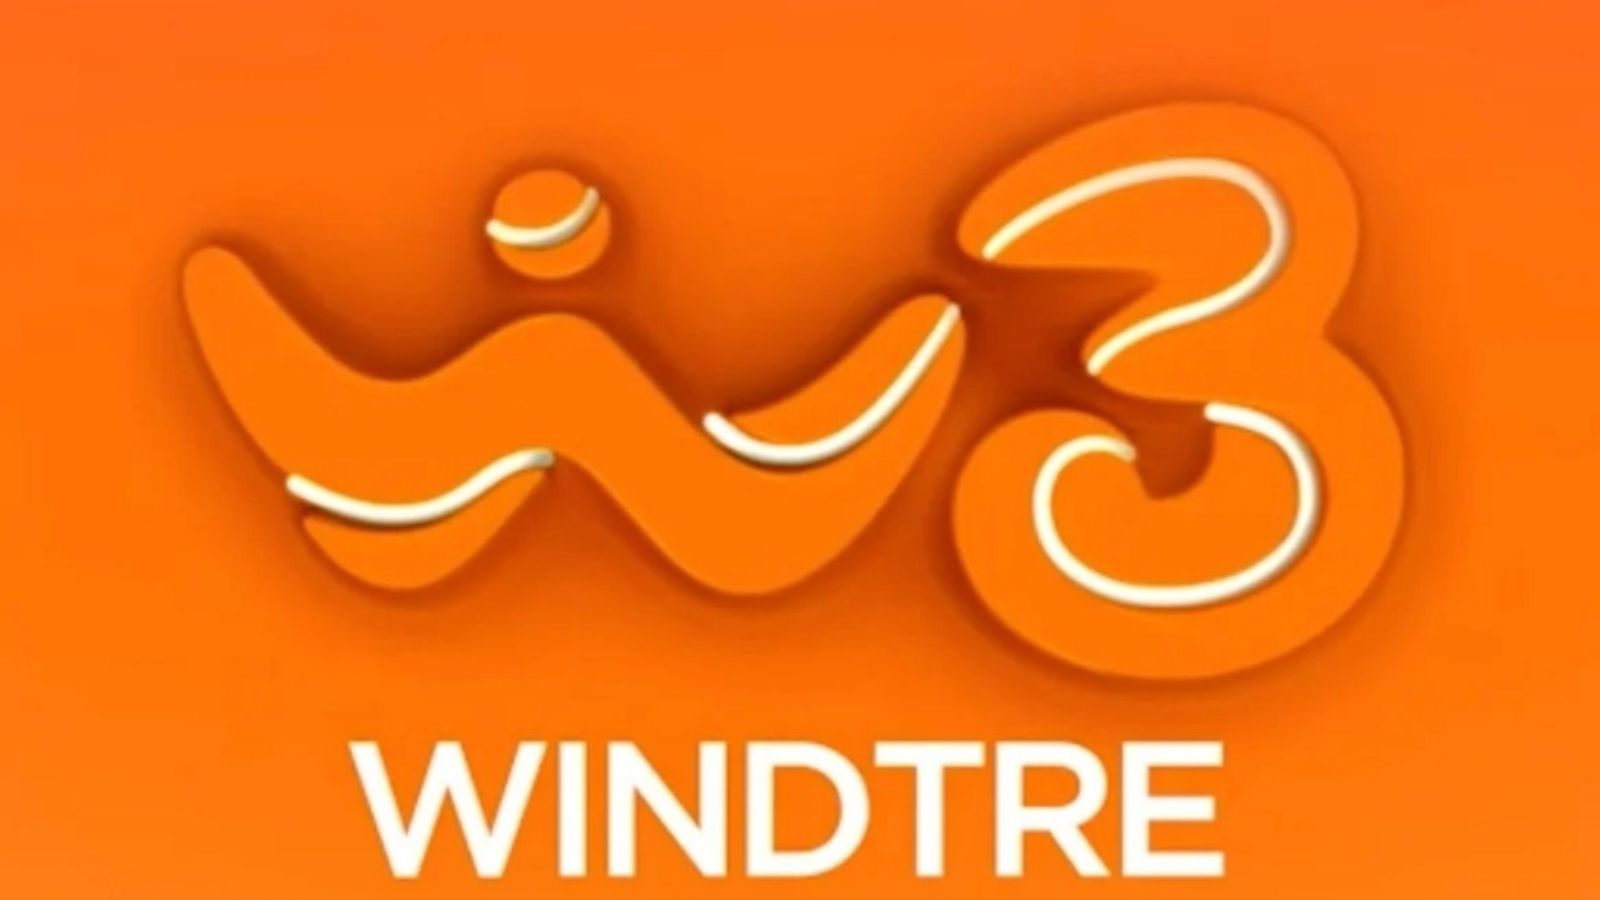 WindTre folle 150 GB ex clienti